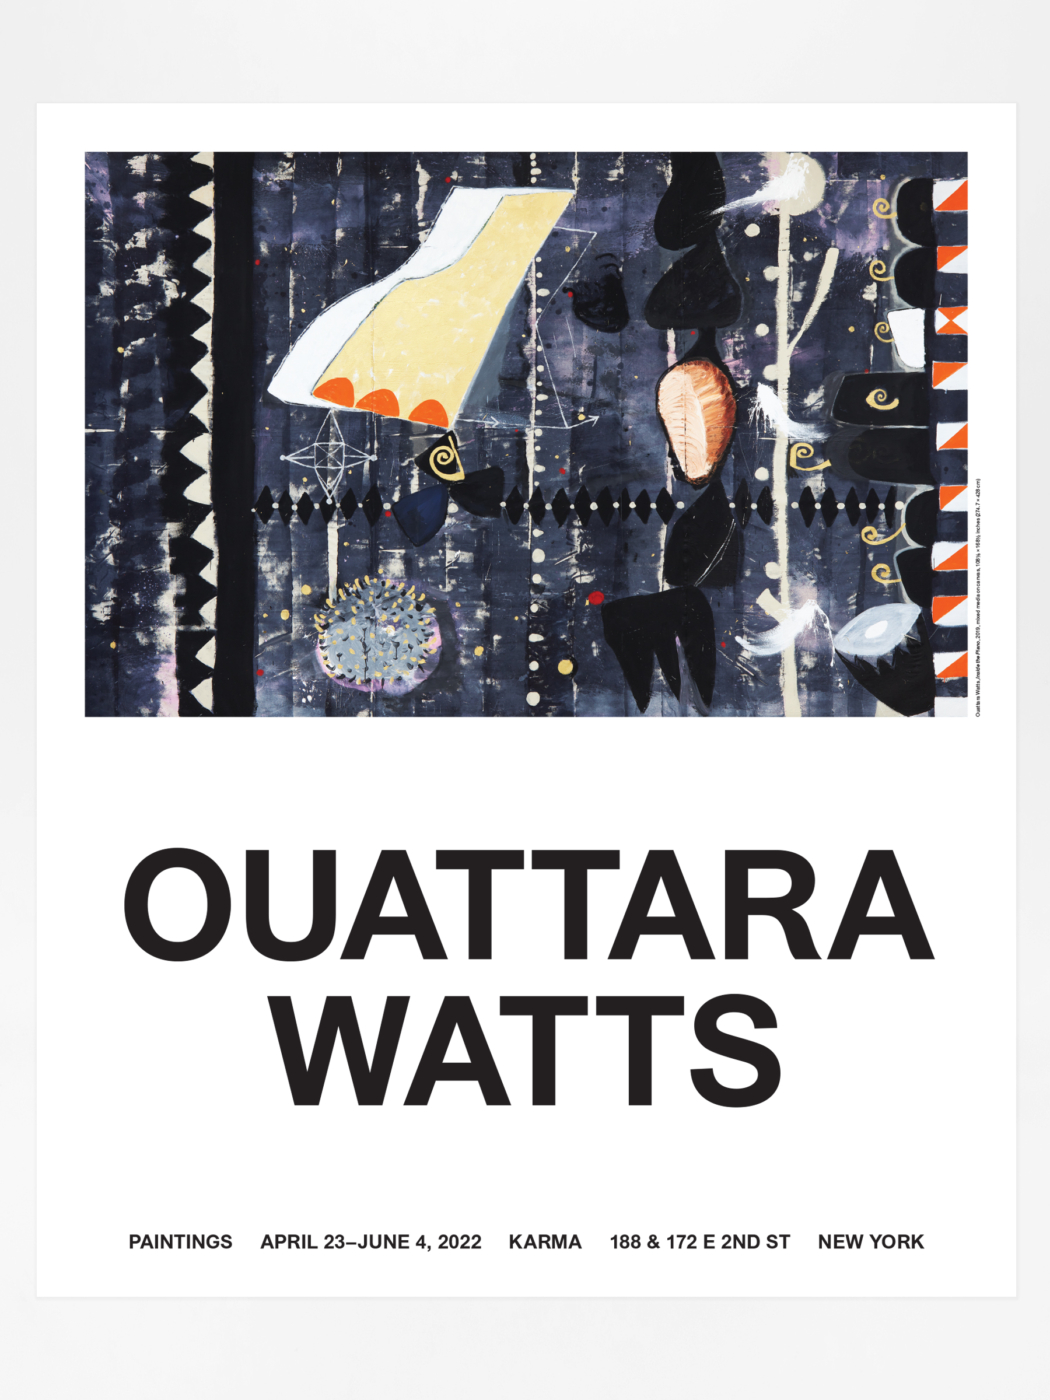 Ouattara Watts, Paintings Poster